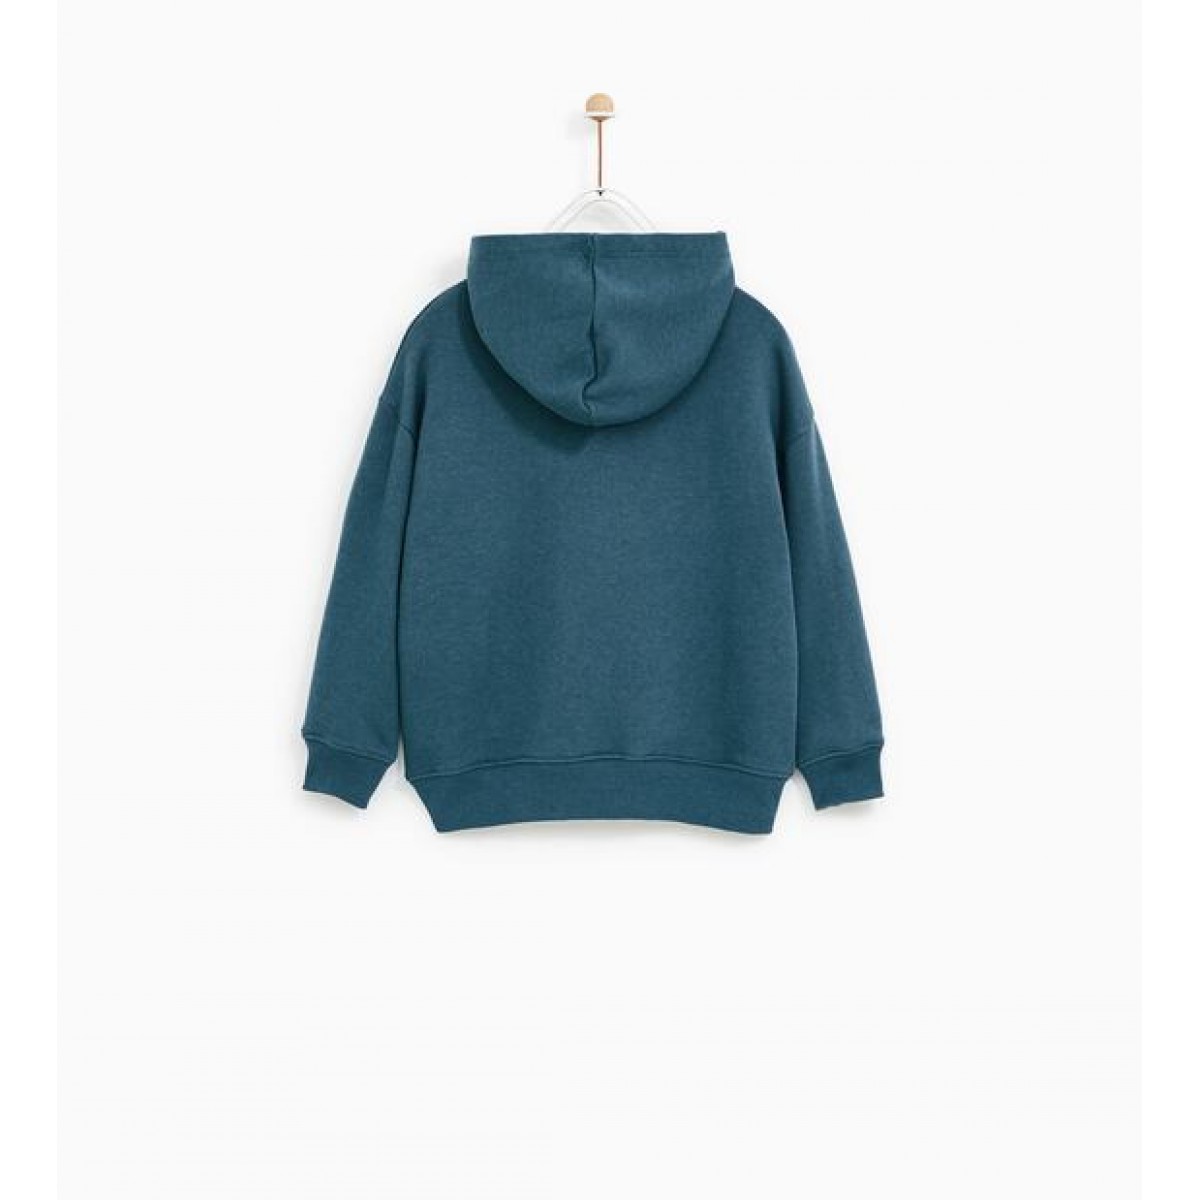 Zara "Stay Cool" Sweatshirt With Reversible Sequins